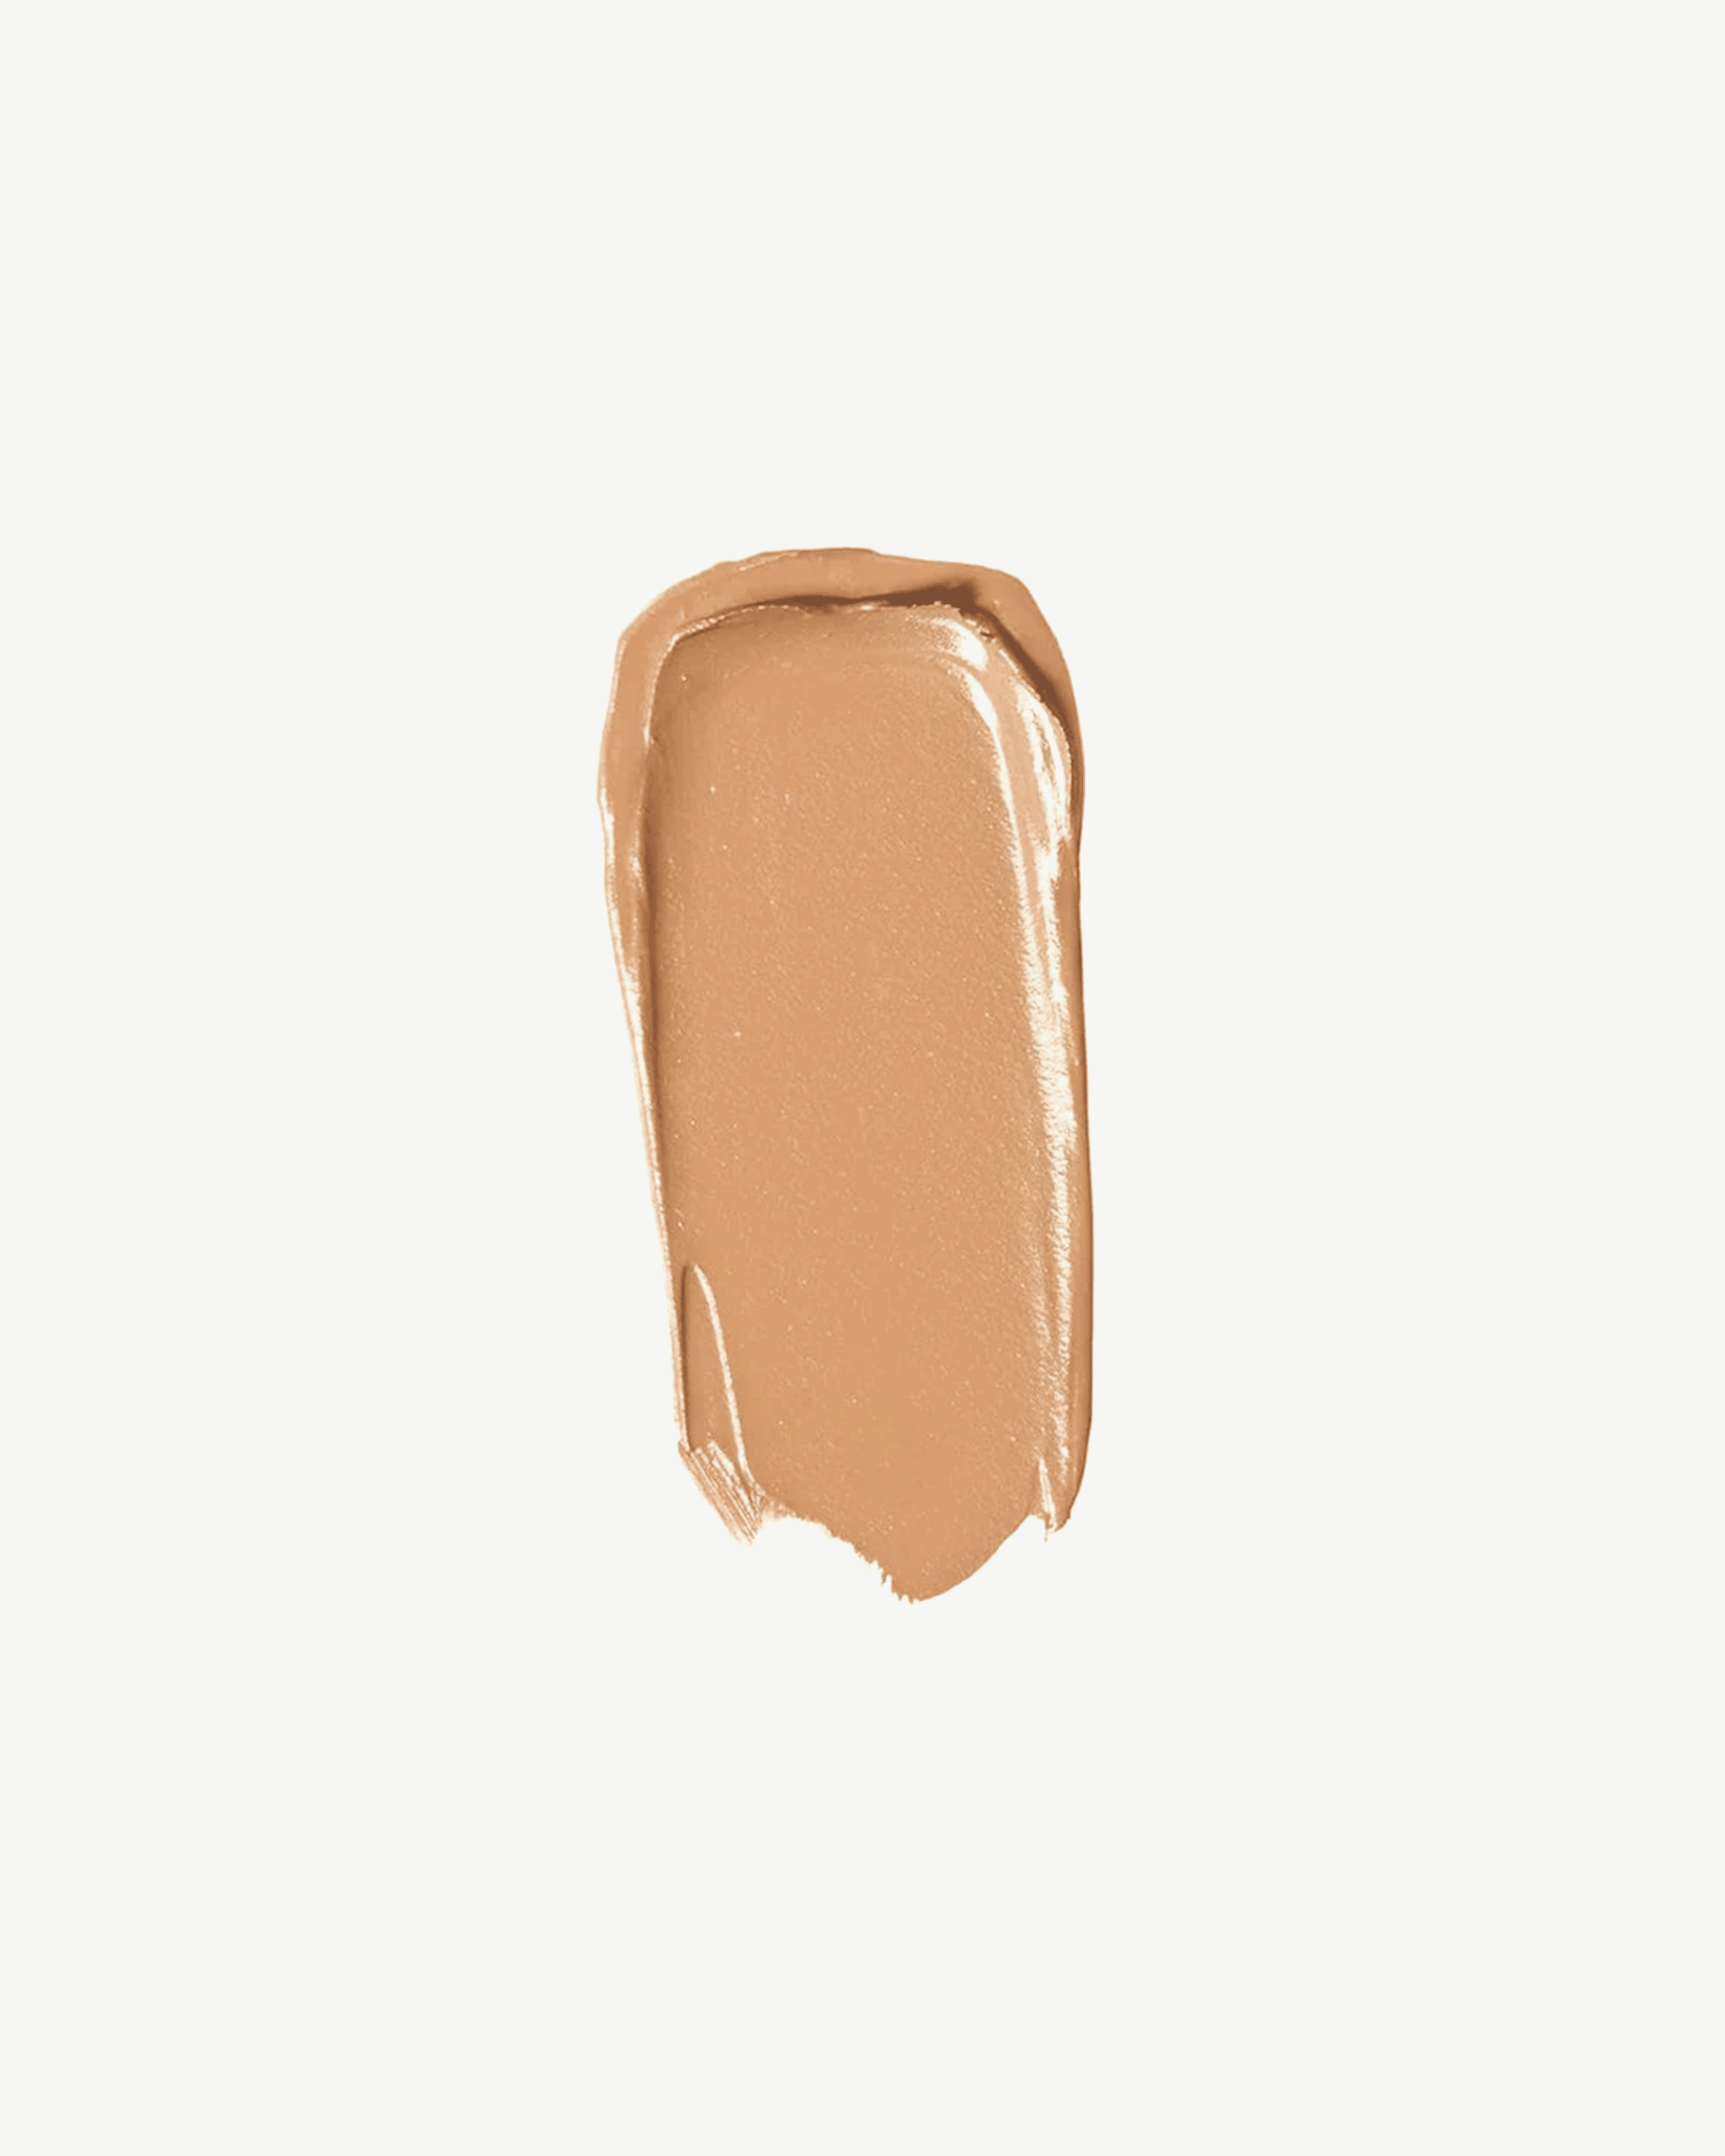 Neutral 70 (caramel light brown with neutral undertones)